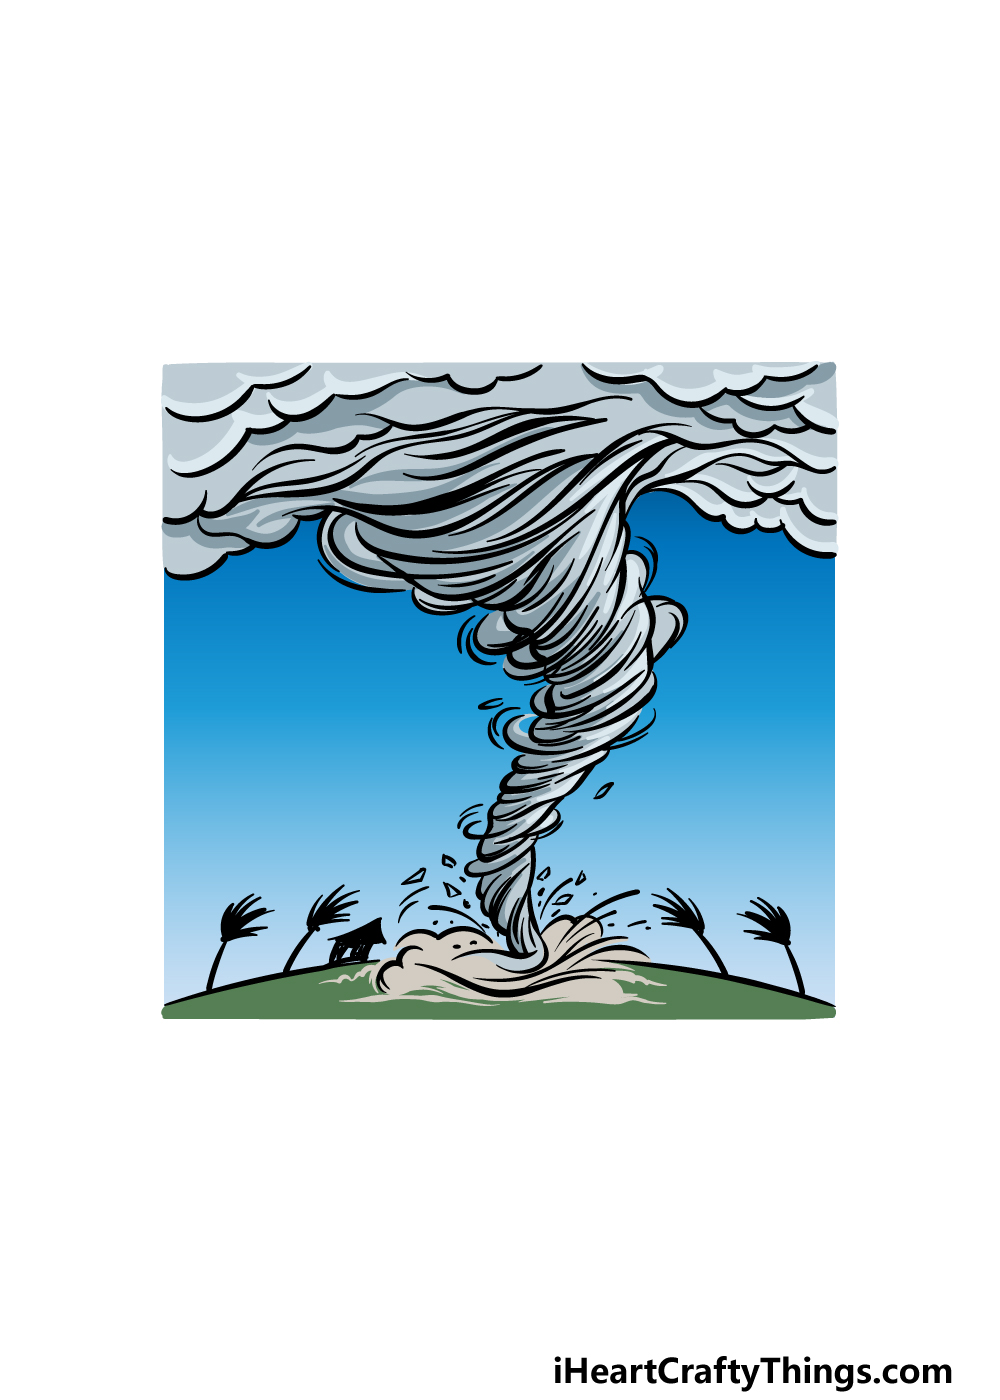 Natural disaster - Wikipedia